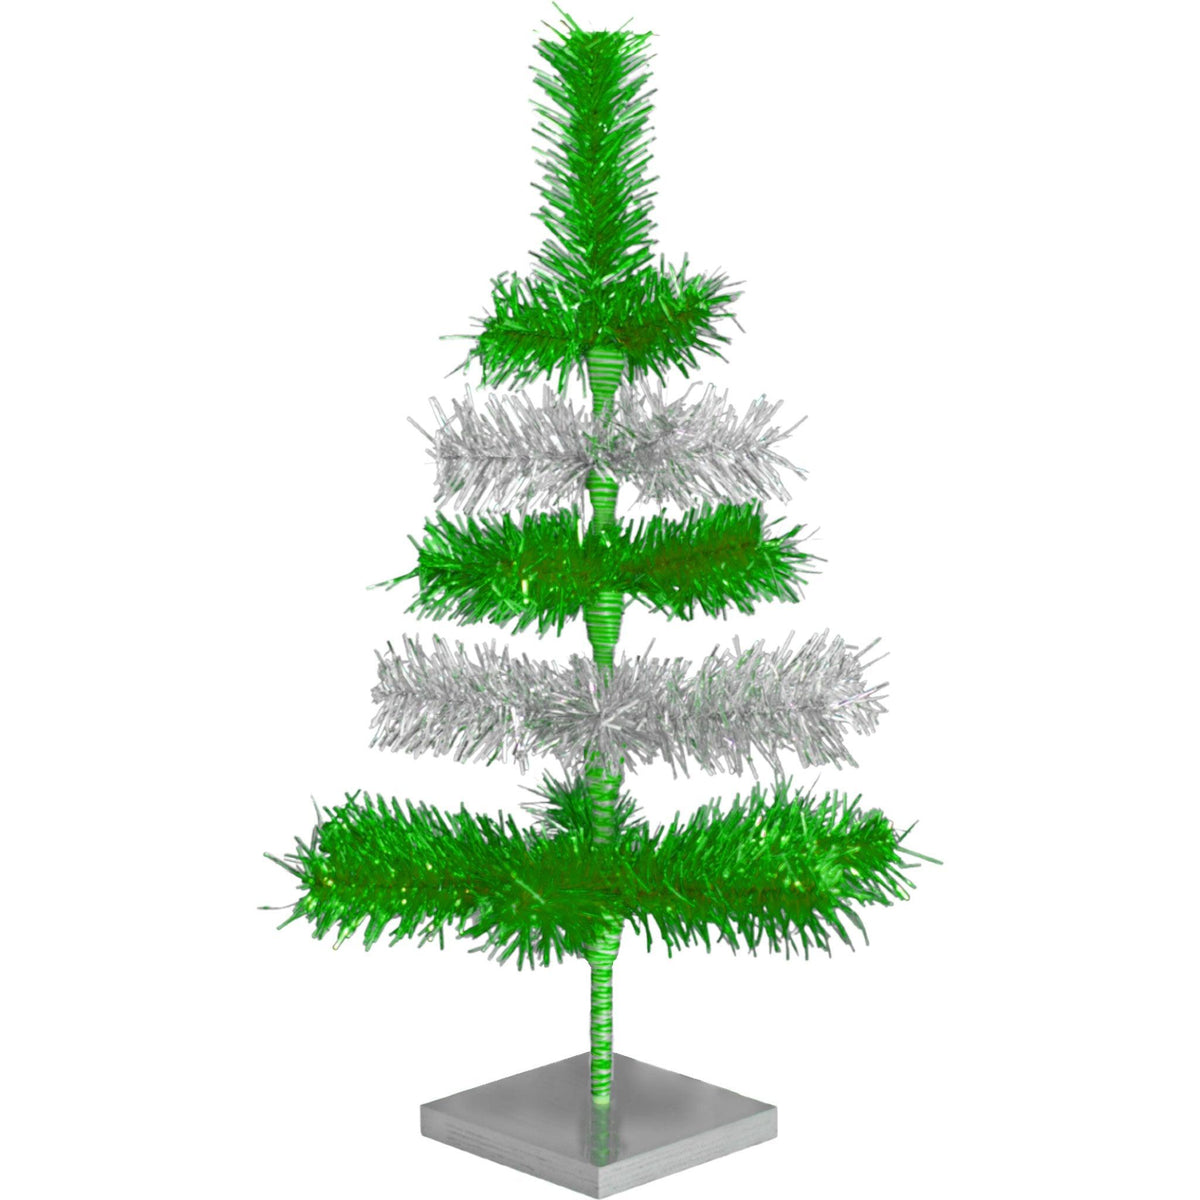 Shiny Green and Metallic Silver Layered Tinsel Christmas Trees on sale at leedisplay.com